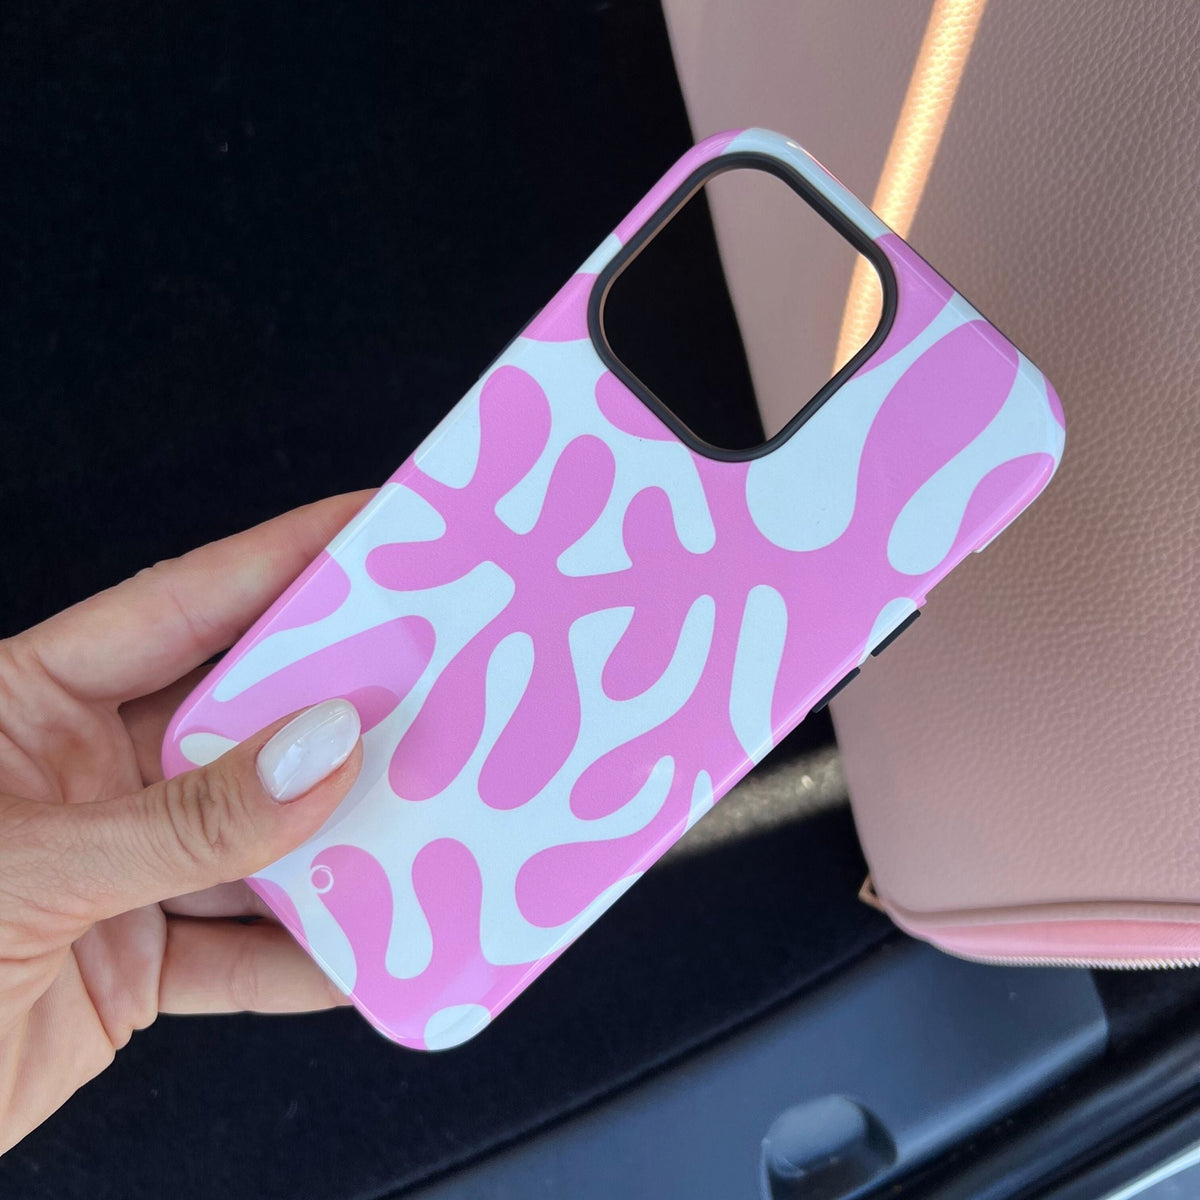 Pink Jungle iPhone Case - iPhone 11 Pro Max